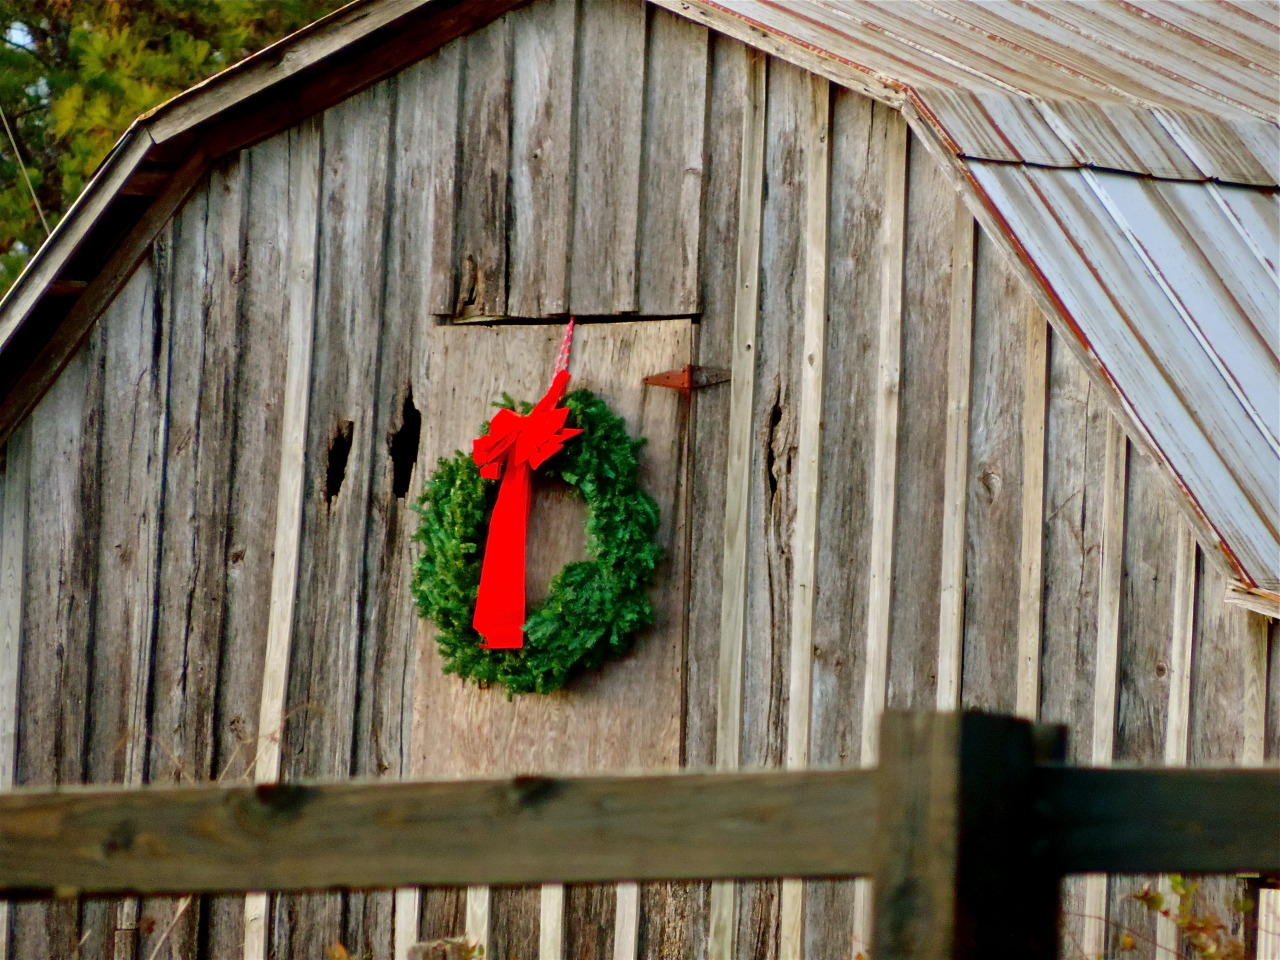 A little holiday cheer on a hay loft’s door
Old barn’s hay loft door / Carrollton, Georgia / Julie Cook / 2014